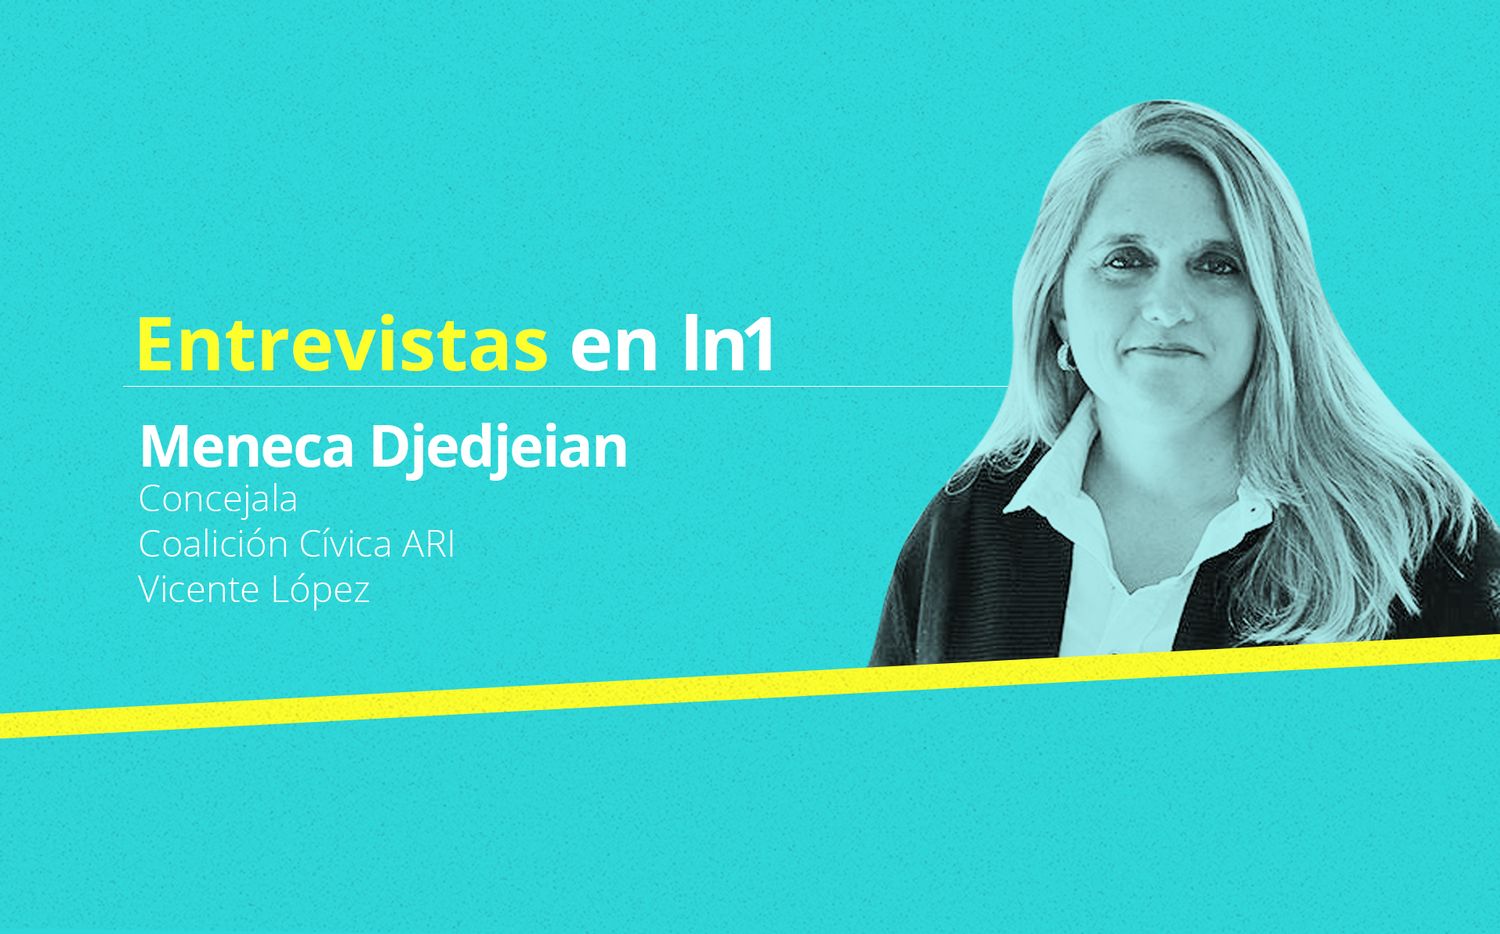 Meneca Djedjeian: "La figura de Néstor Kirchner es totalmente controversial"